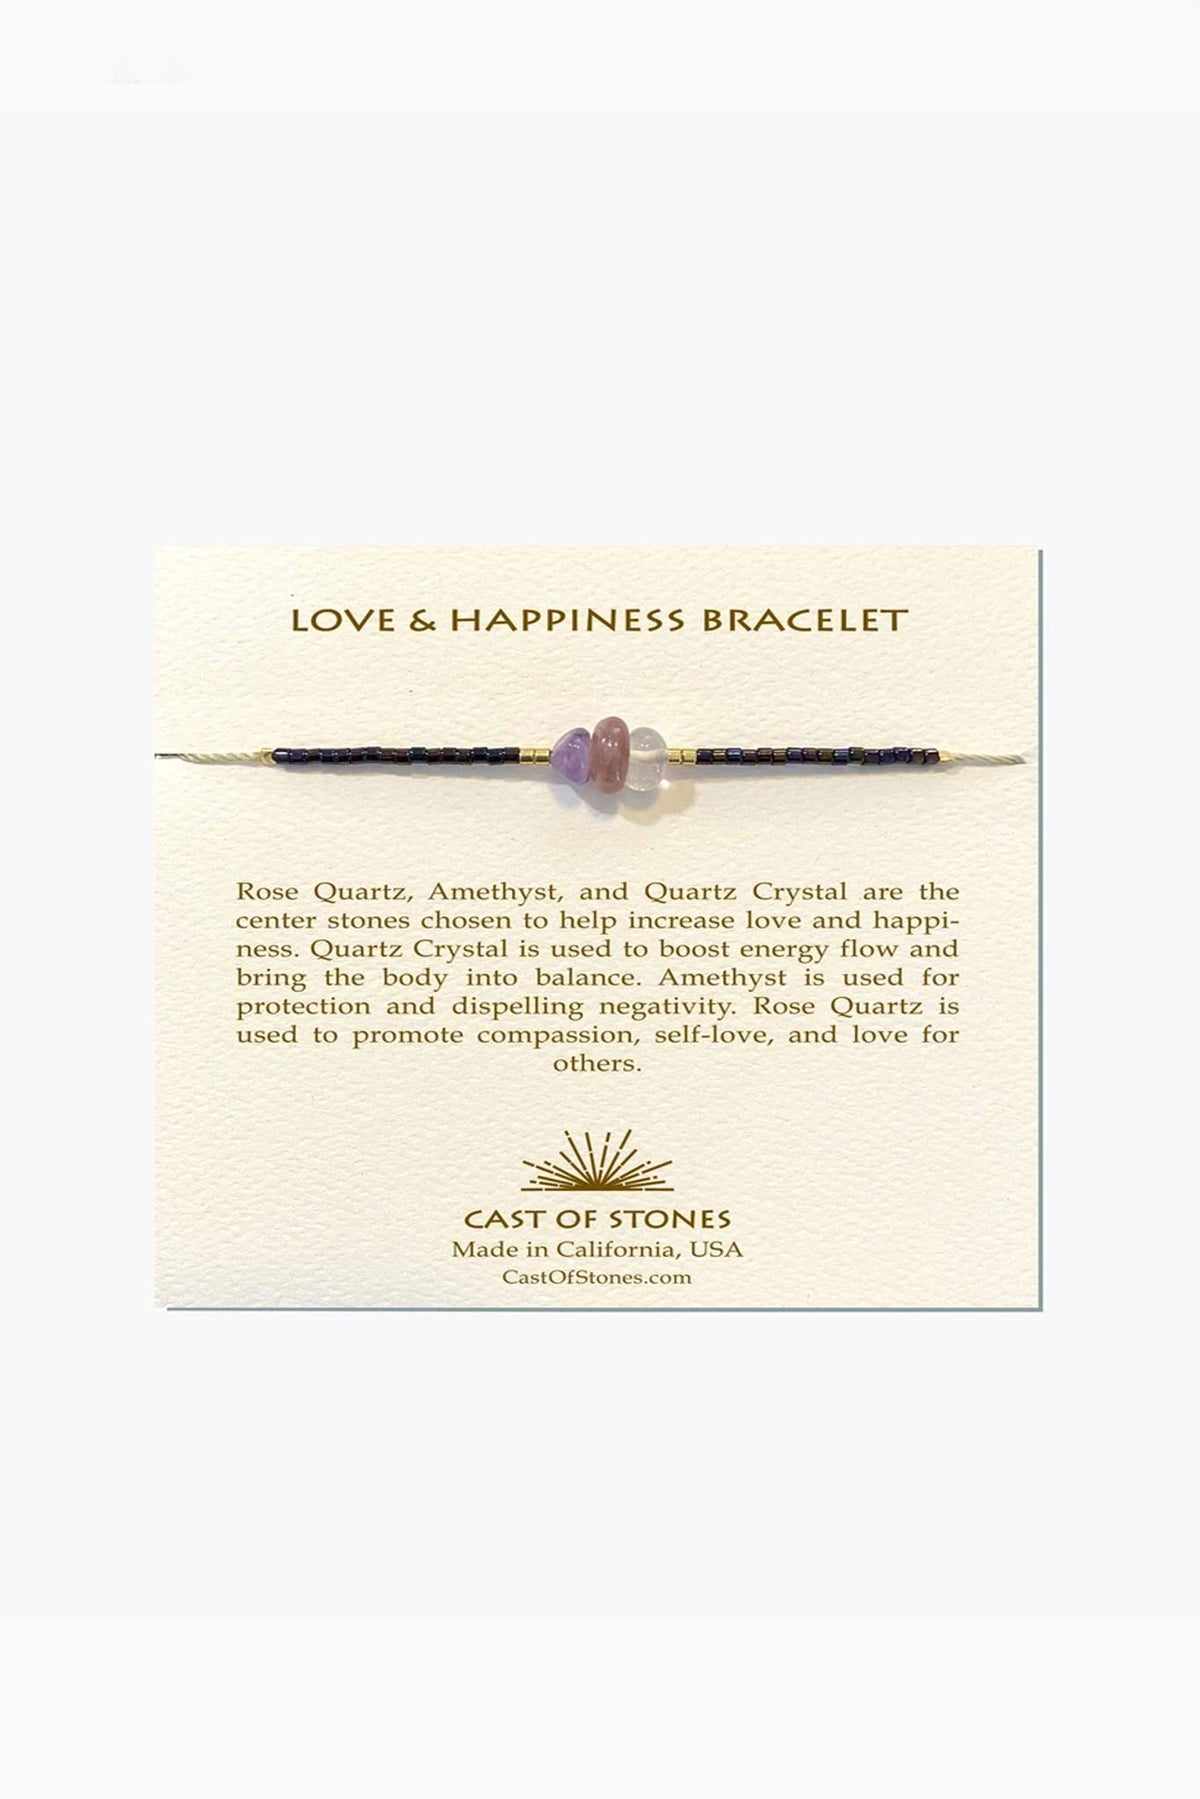 Love and Happiness Bracelet Bracelets Cast of Stones